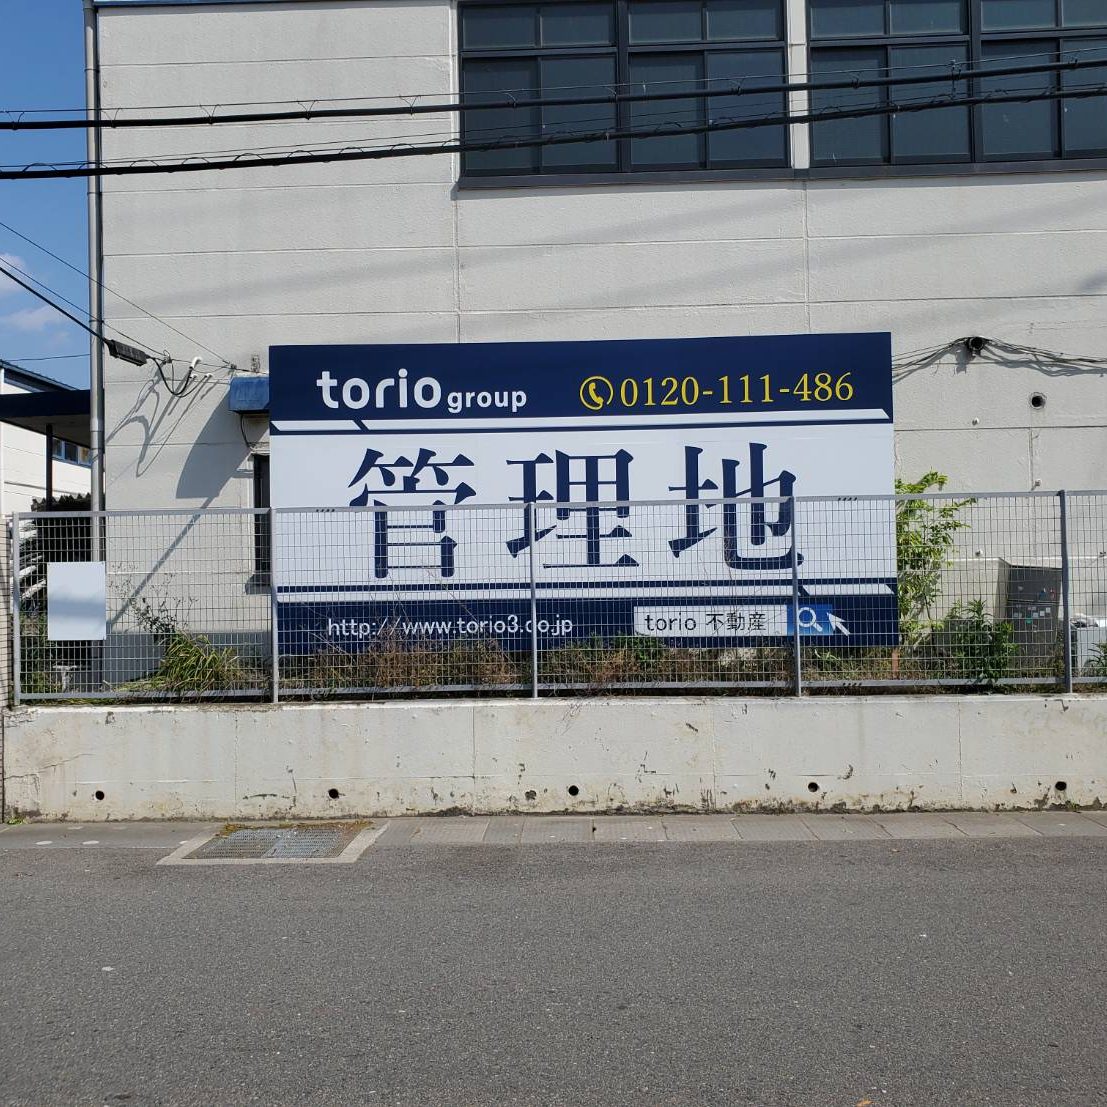 torio group様の施工事例